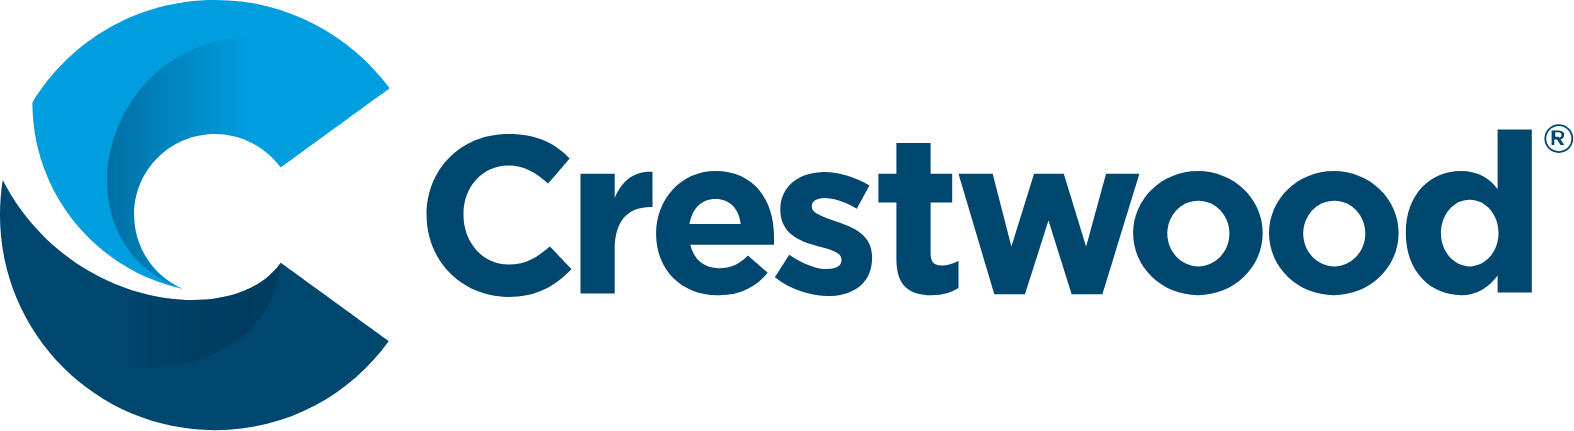 Crestwood Equity Partners logo large (transparent PNG)